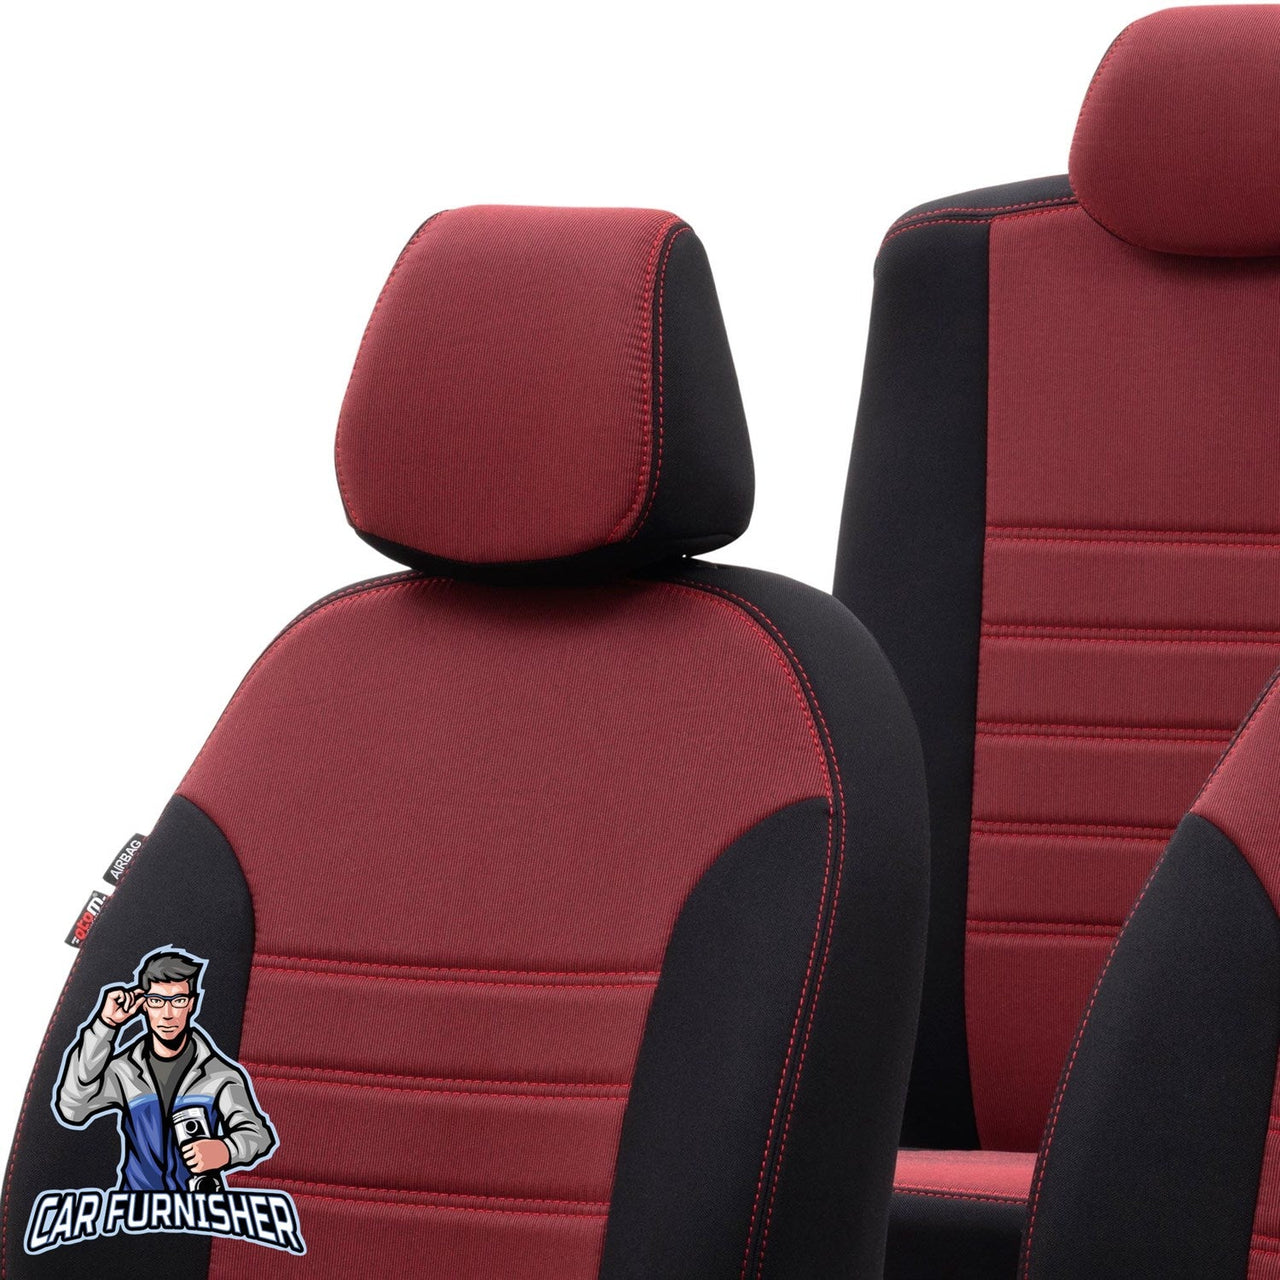 Volkswagen Caddy Seat Cover Original Jacquard Design Red Jacquard Fabric